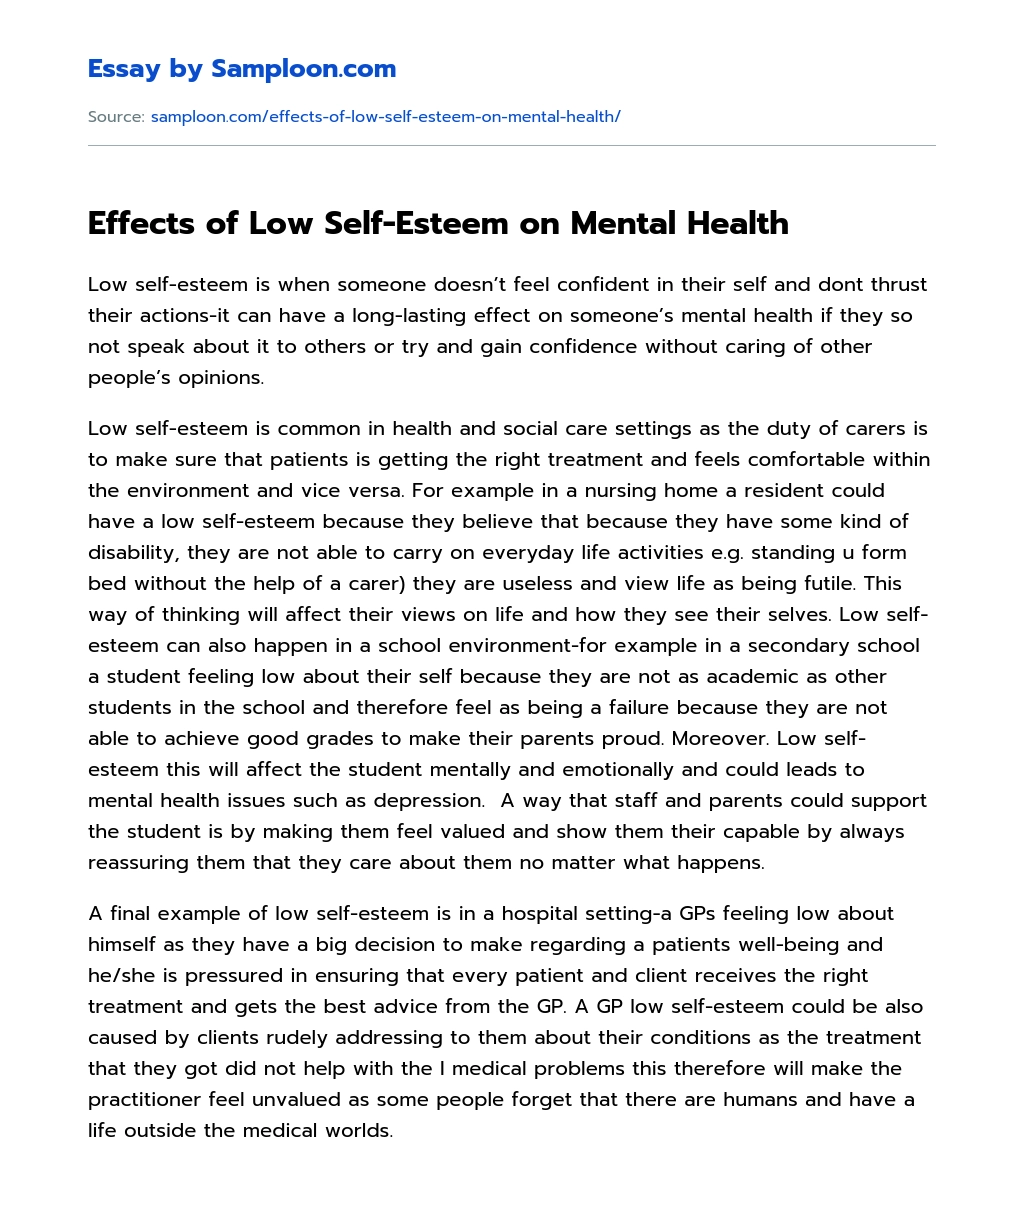 Effects of Low Self-Esteem on Mental Health essay